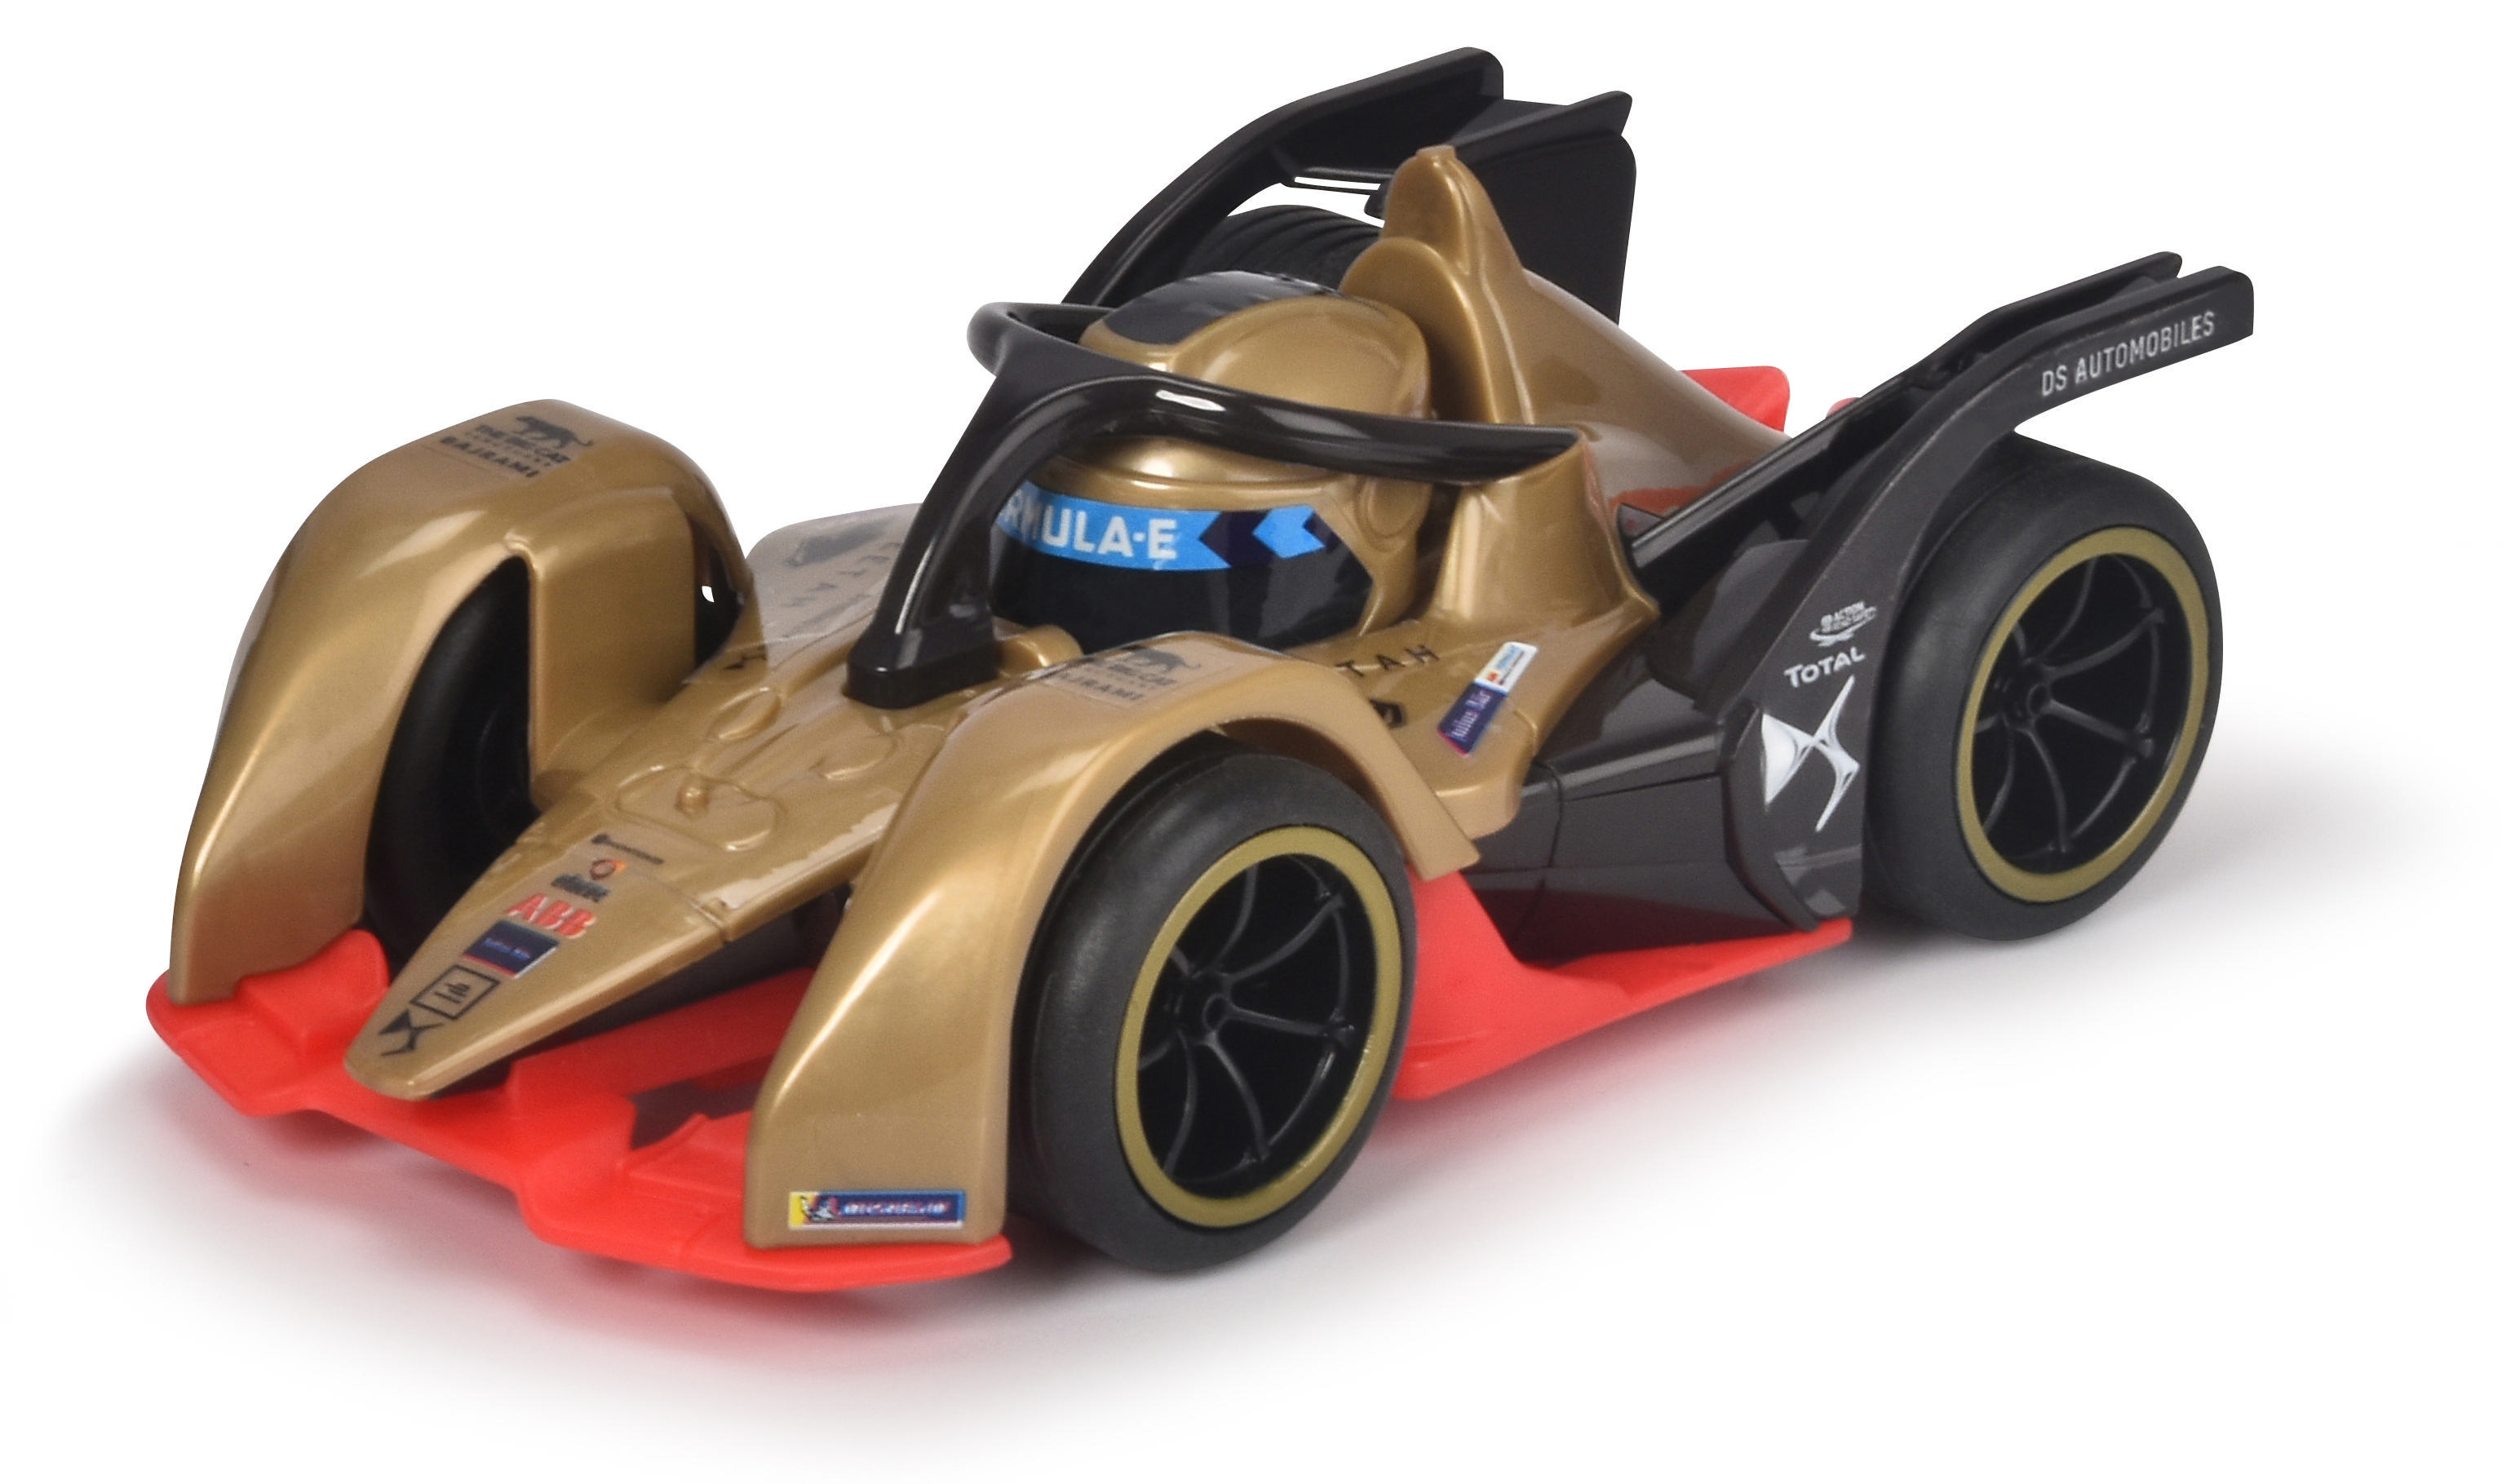 Spielzeugauto 3-sort. Formula Racer, DICKIE-TOYS Mehrfarbig - E Pullstring